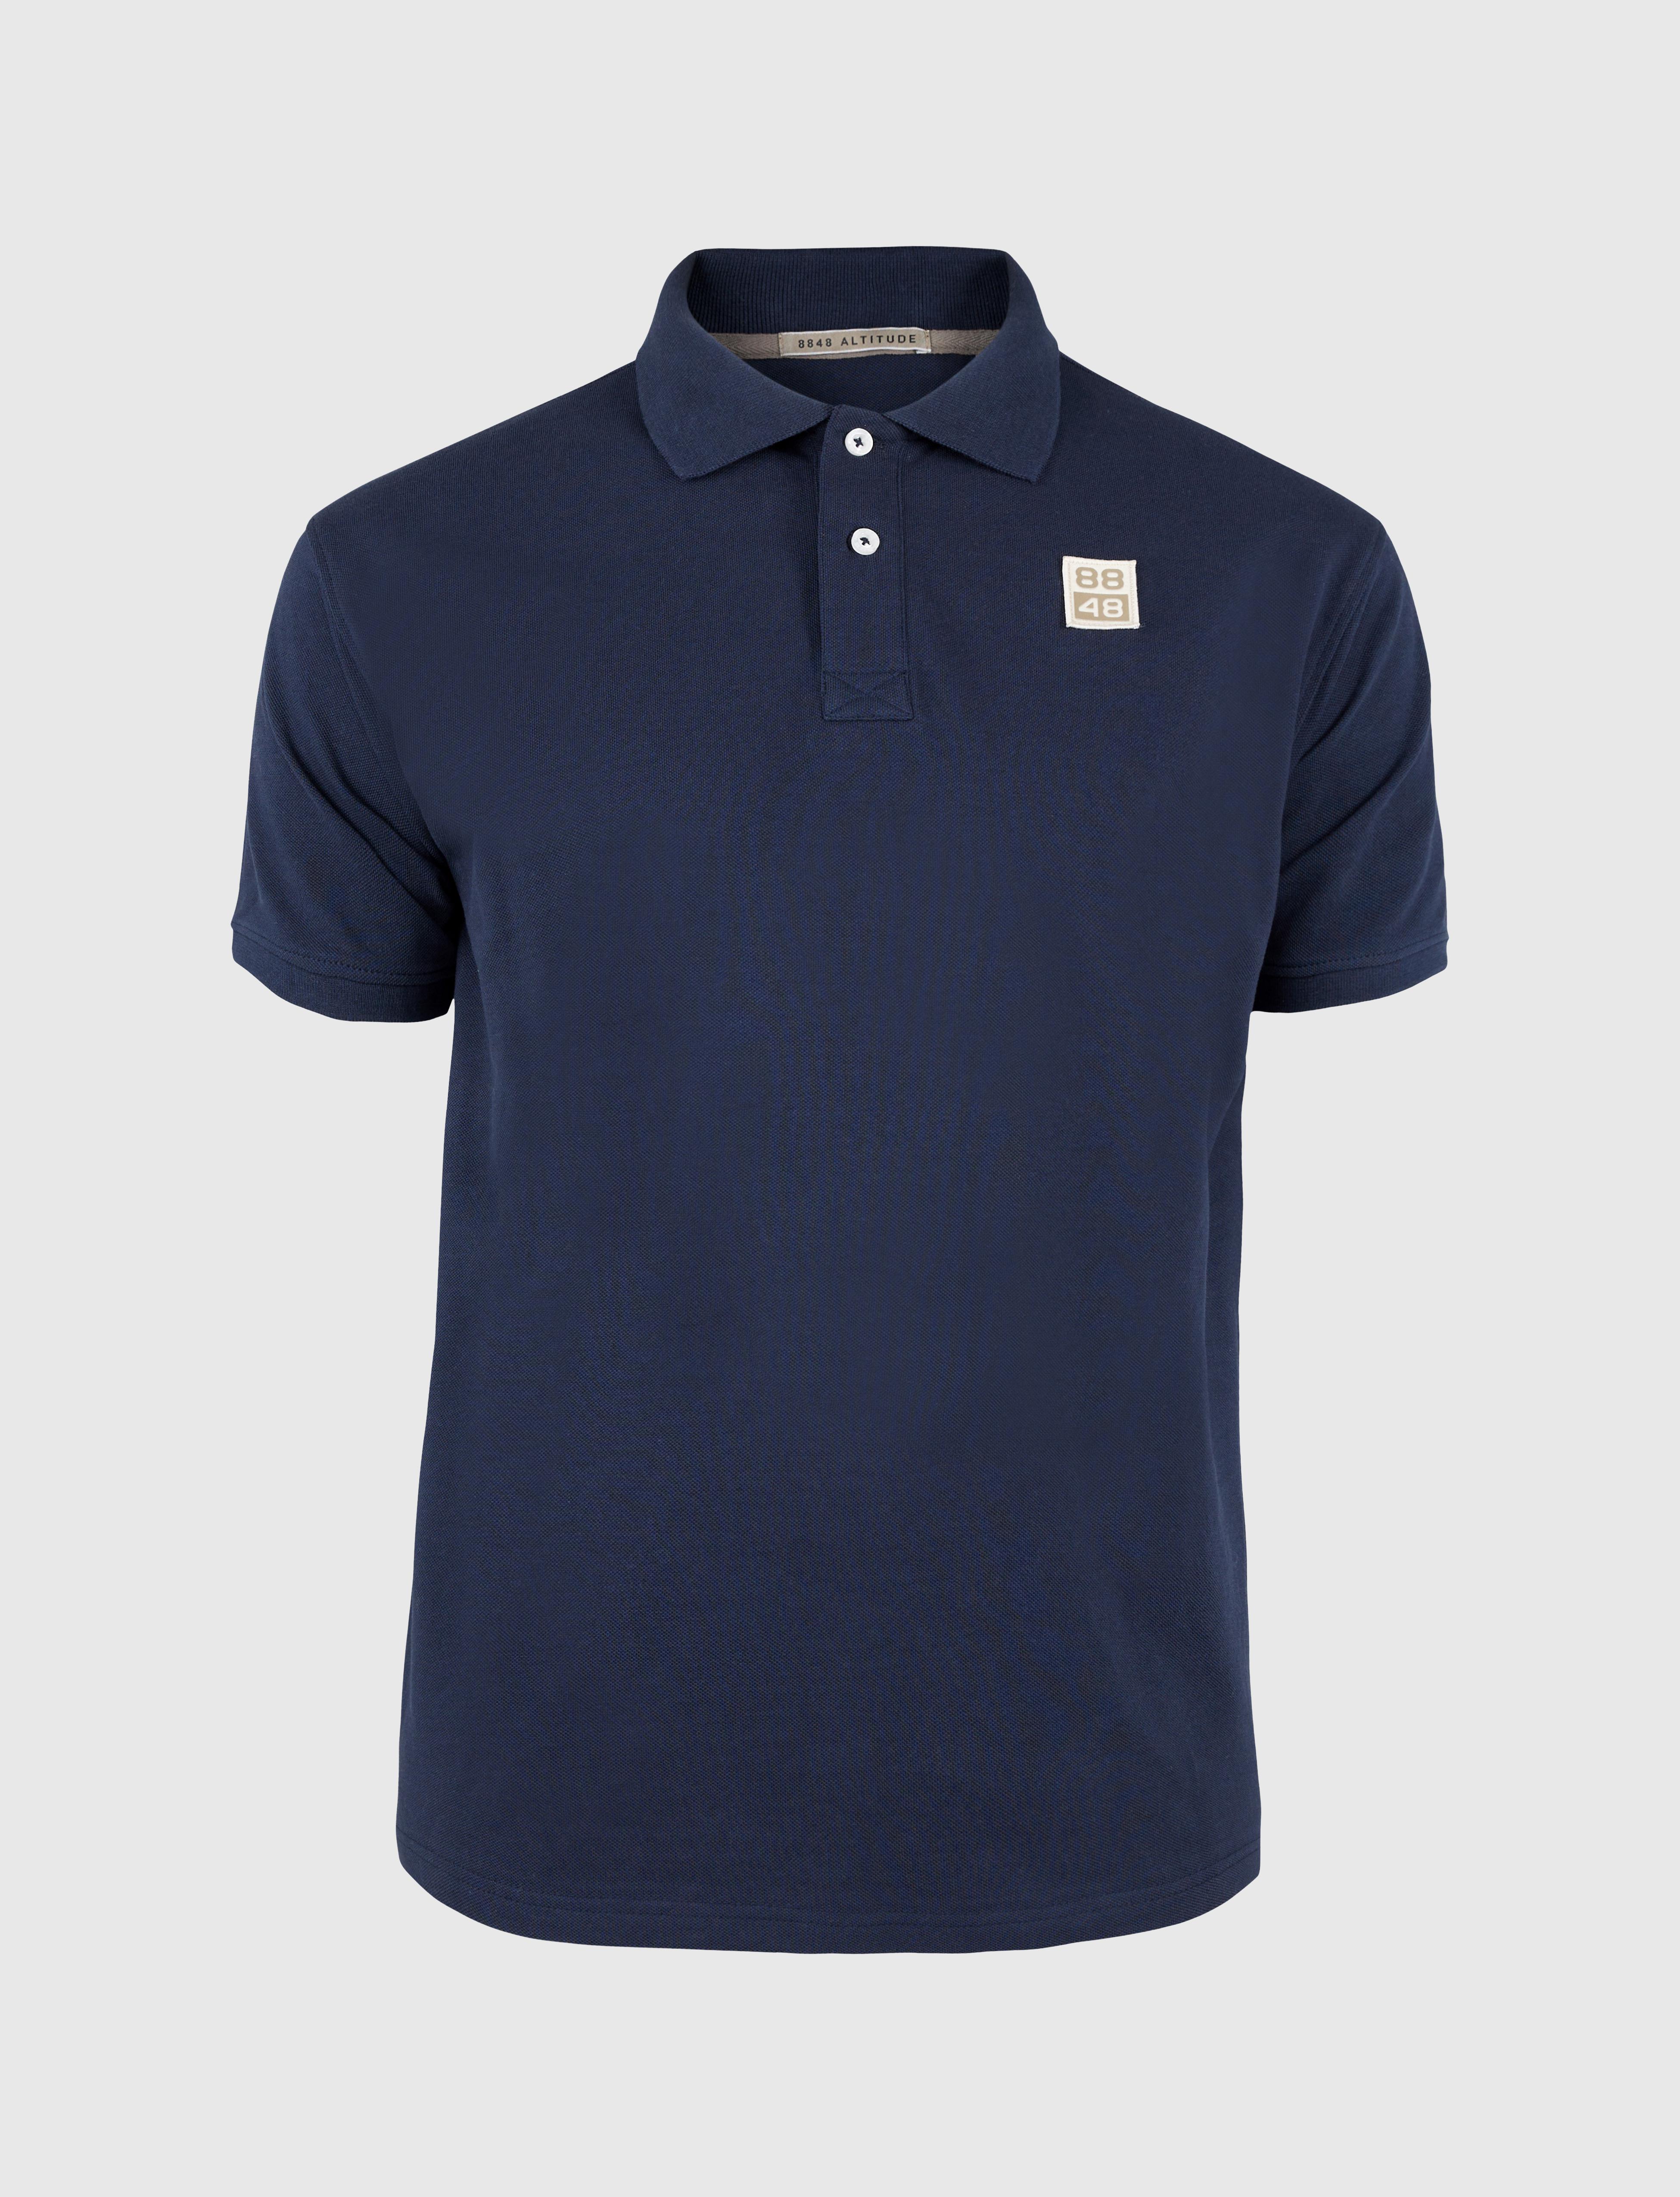 88 Logo Polo Shirt Navy - Marinblå piké herr